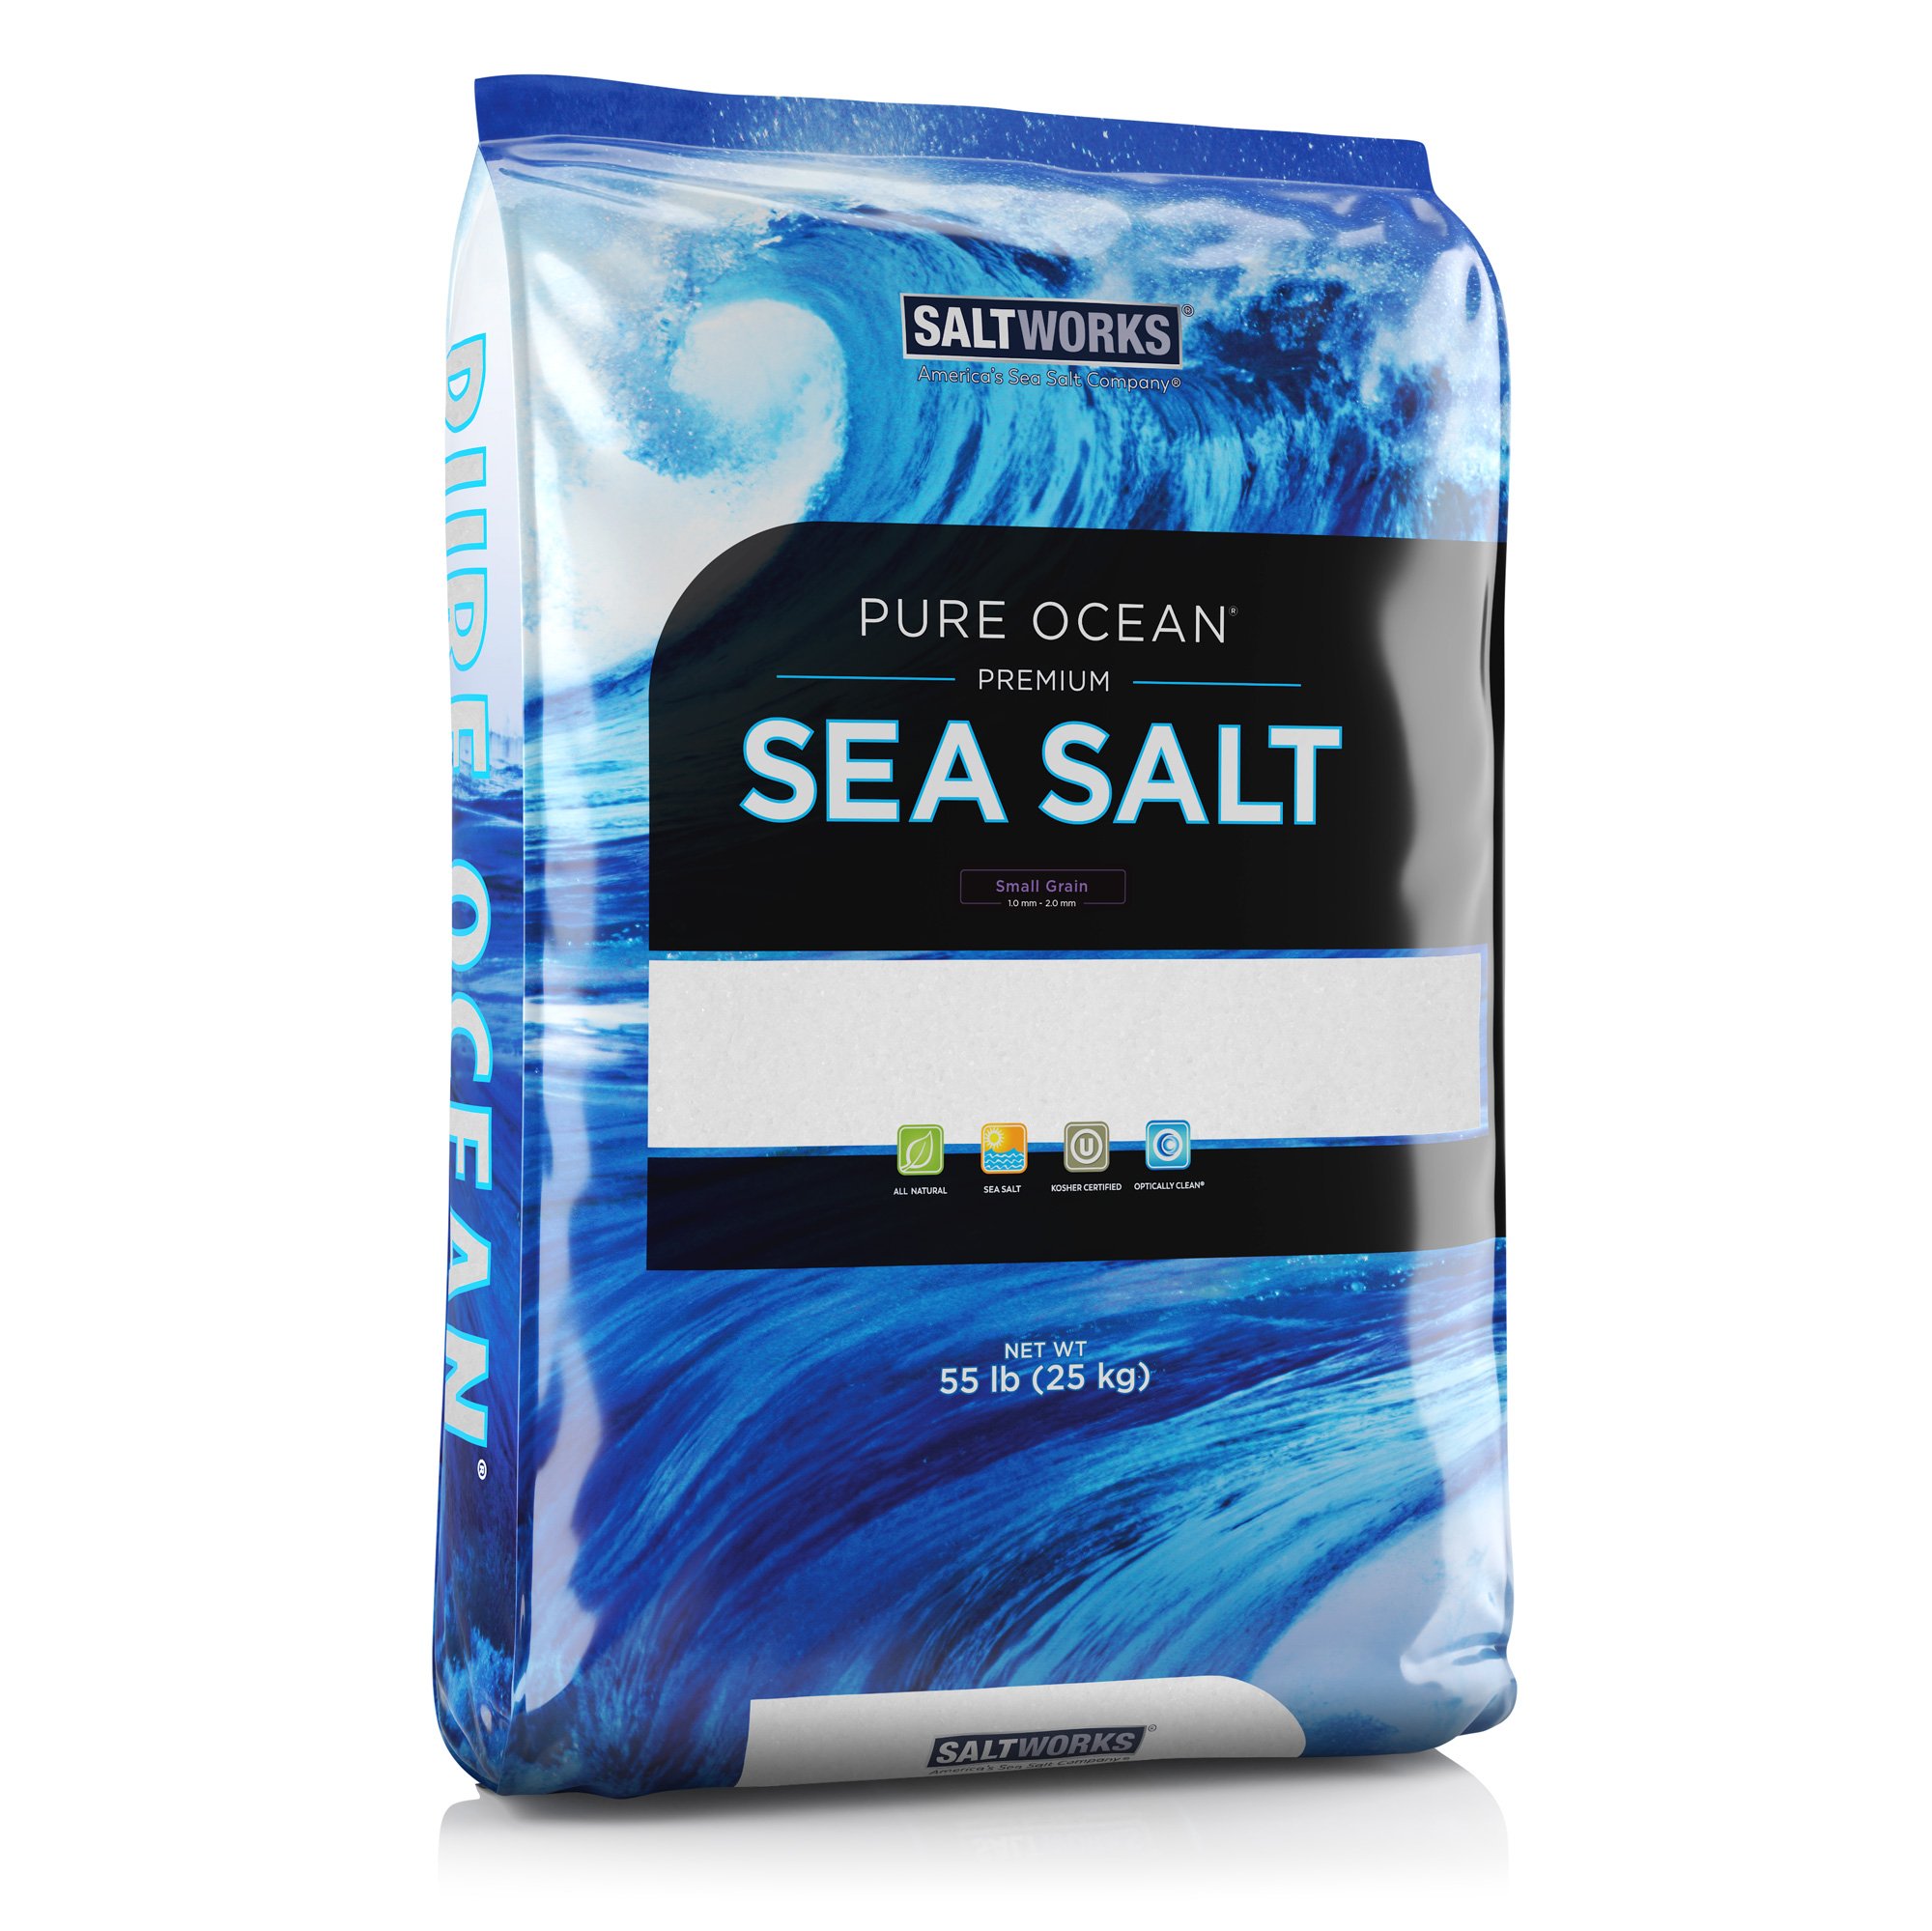 Salt Away SA04 - Credit General Supplies